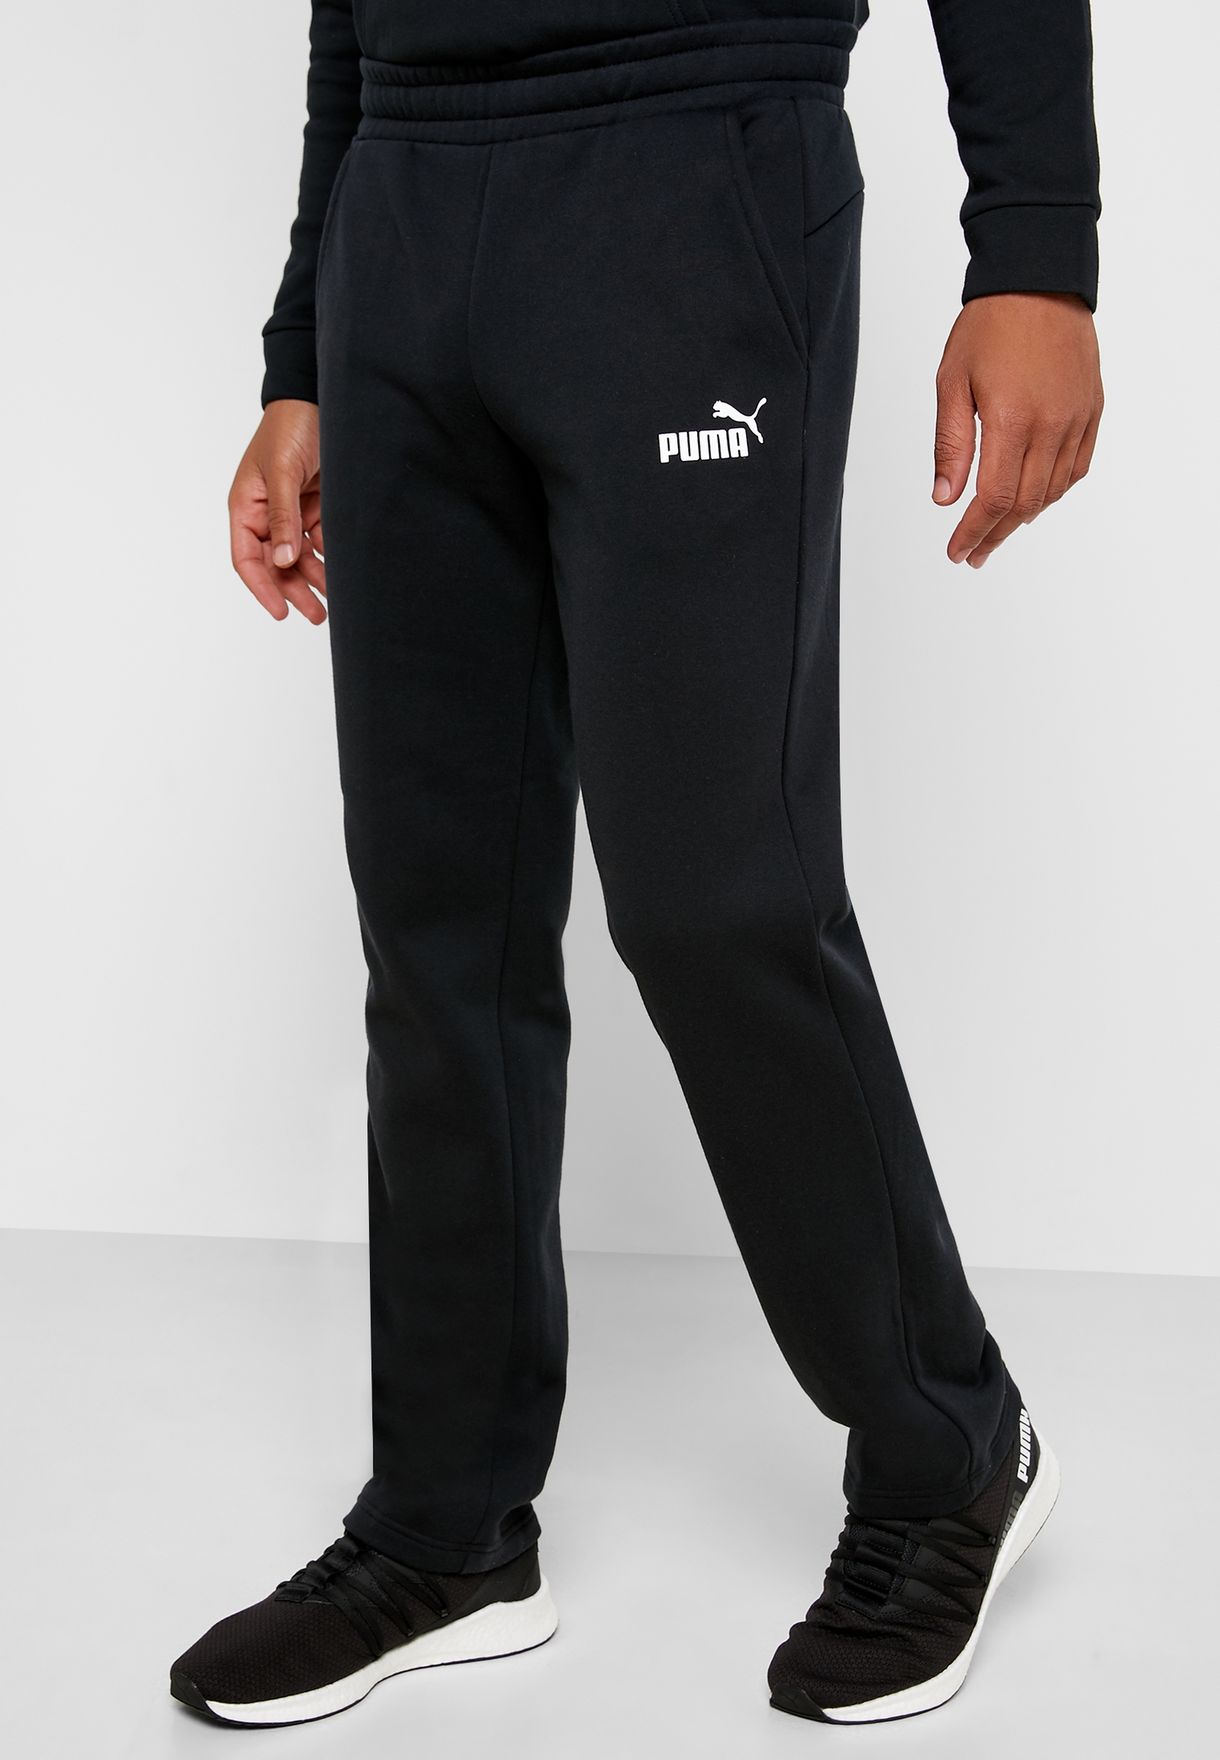 puma sweatpants black